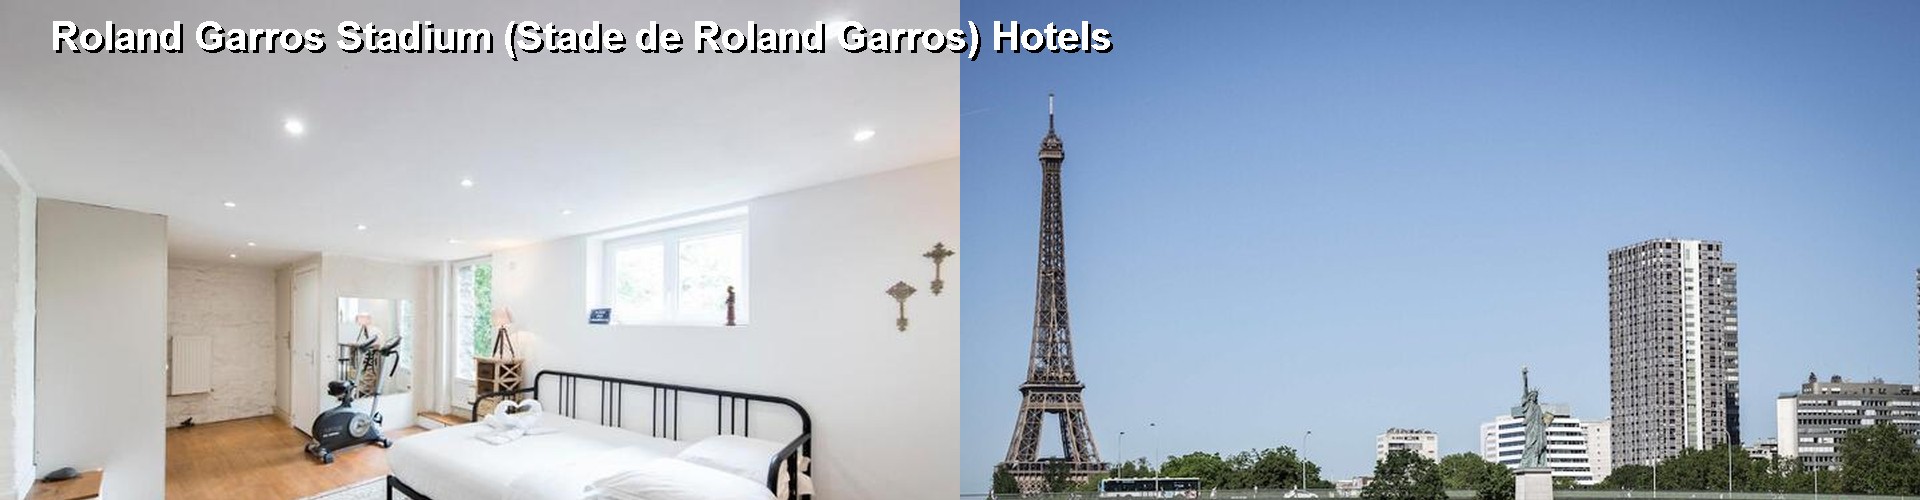 5 Best Hotels near Roland Garros Stadium (Stade de Roland Garros)